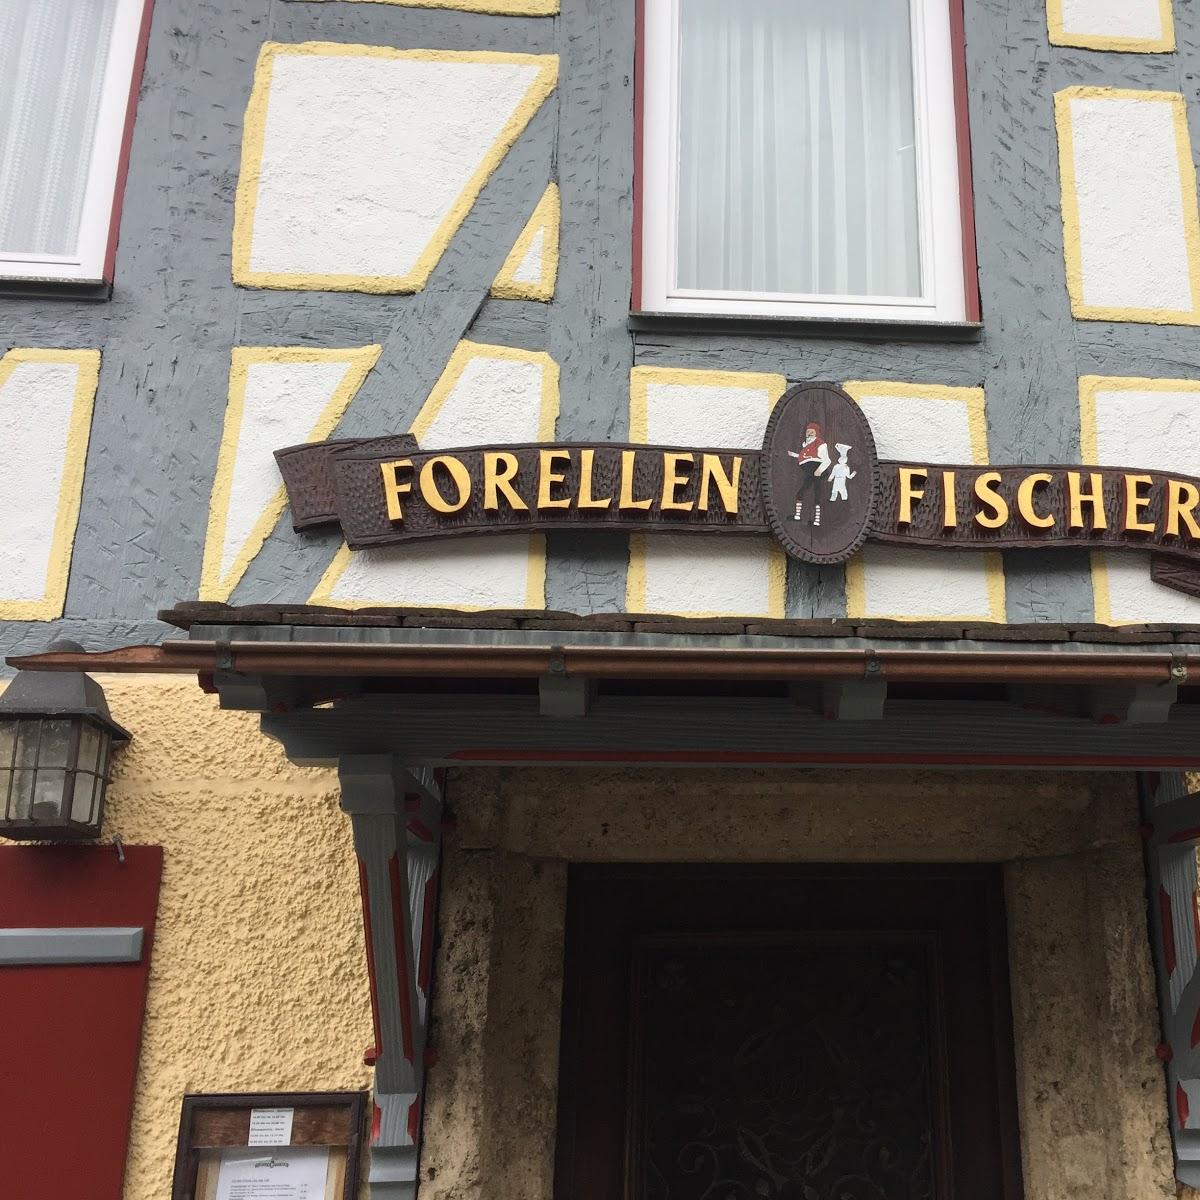 Restaurant "Restaurant Forellenfischer" in Blaubeuren